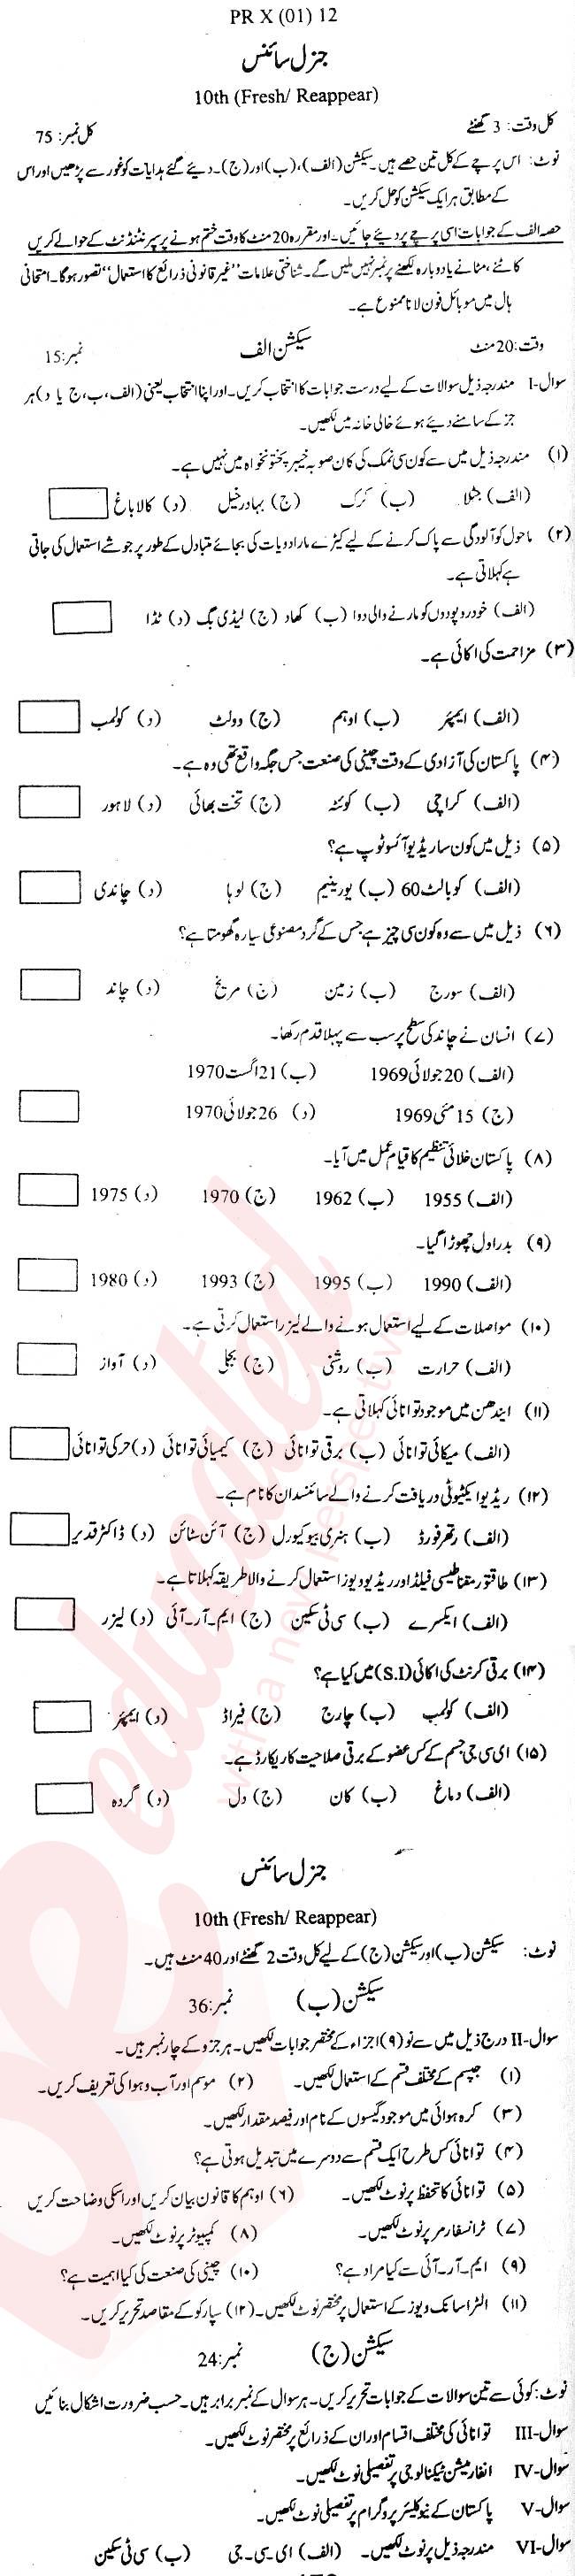 General Science 10th Urdu Medium Past Paper Group 1 BISE Peshawar 2012